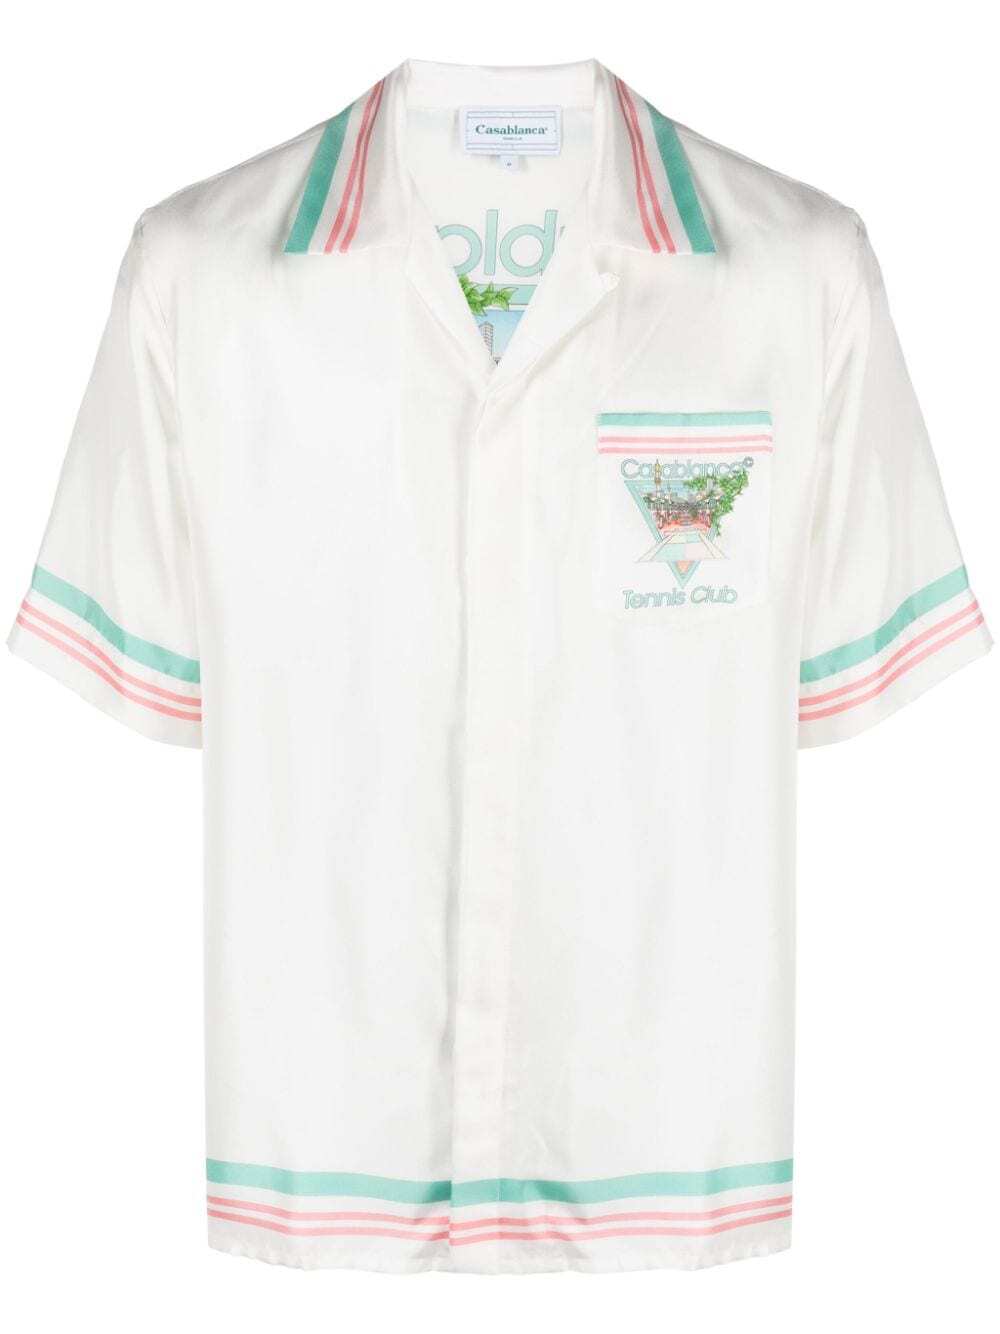 Tennis Club Icon silk shirt